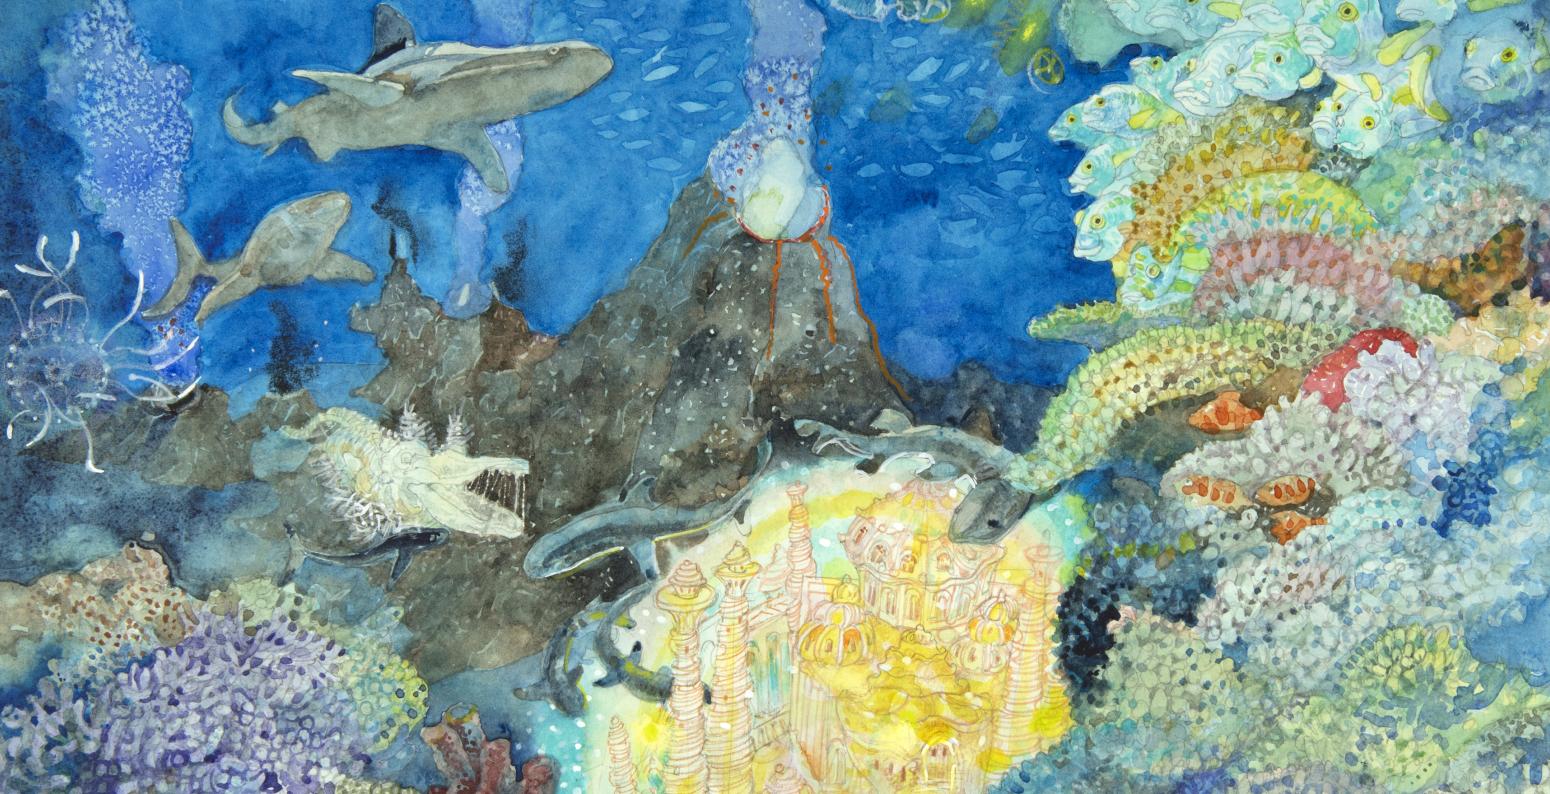 Illustration of underwater reef scene